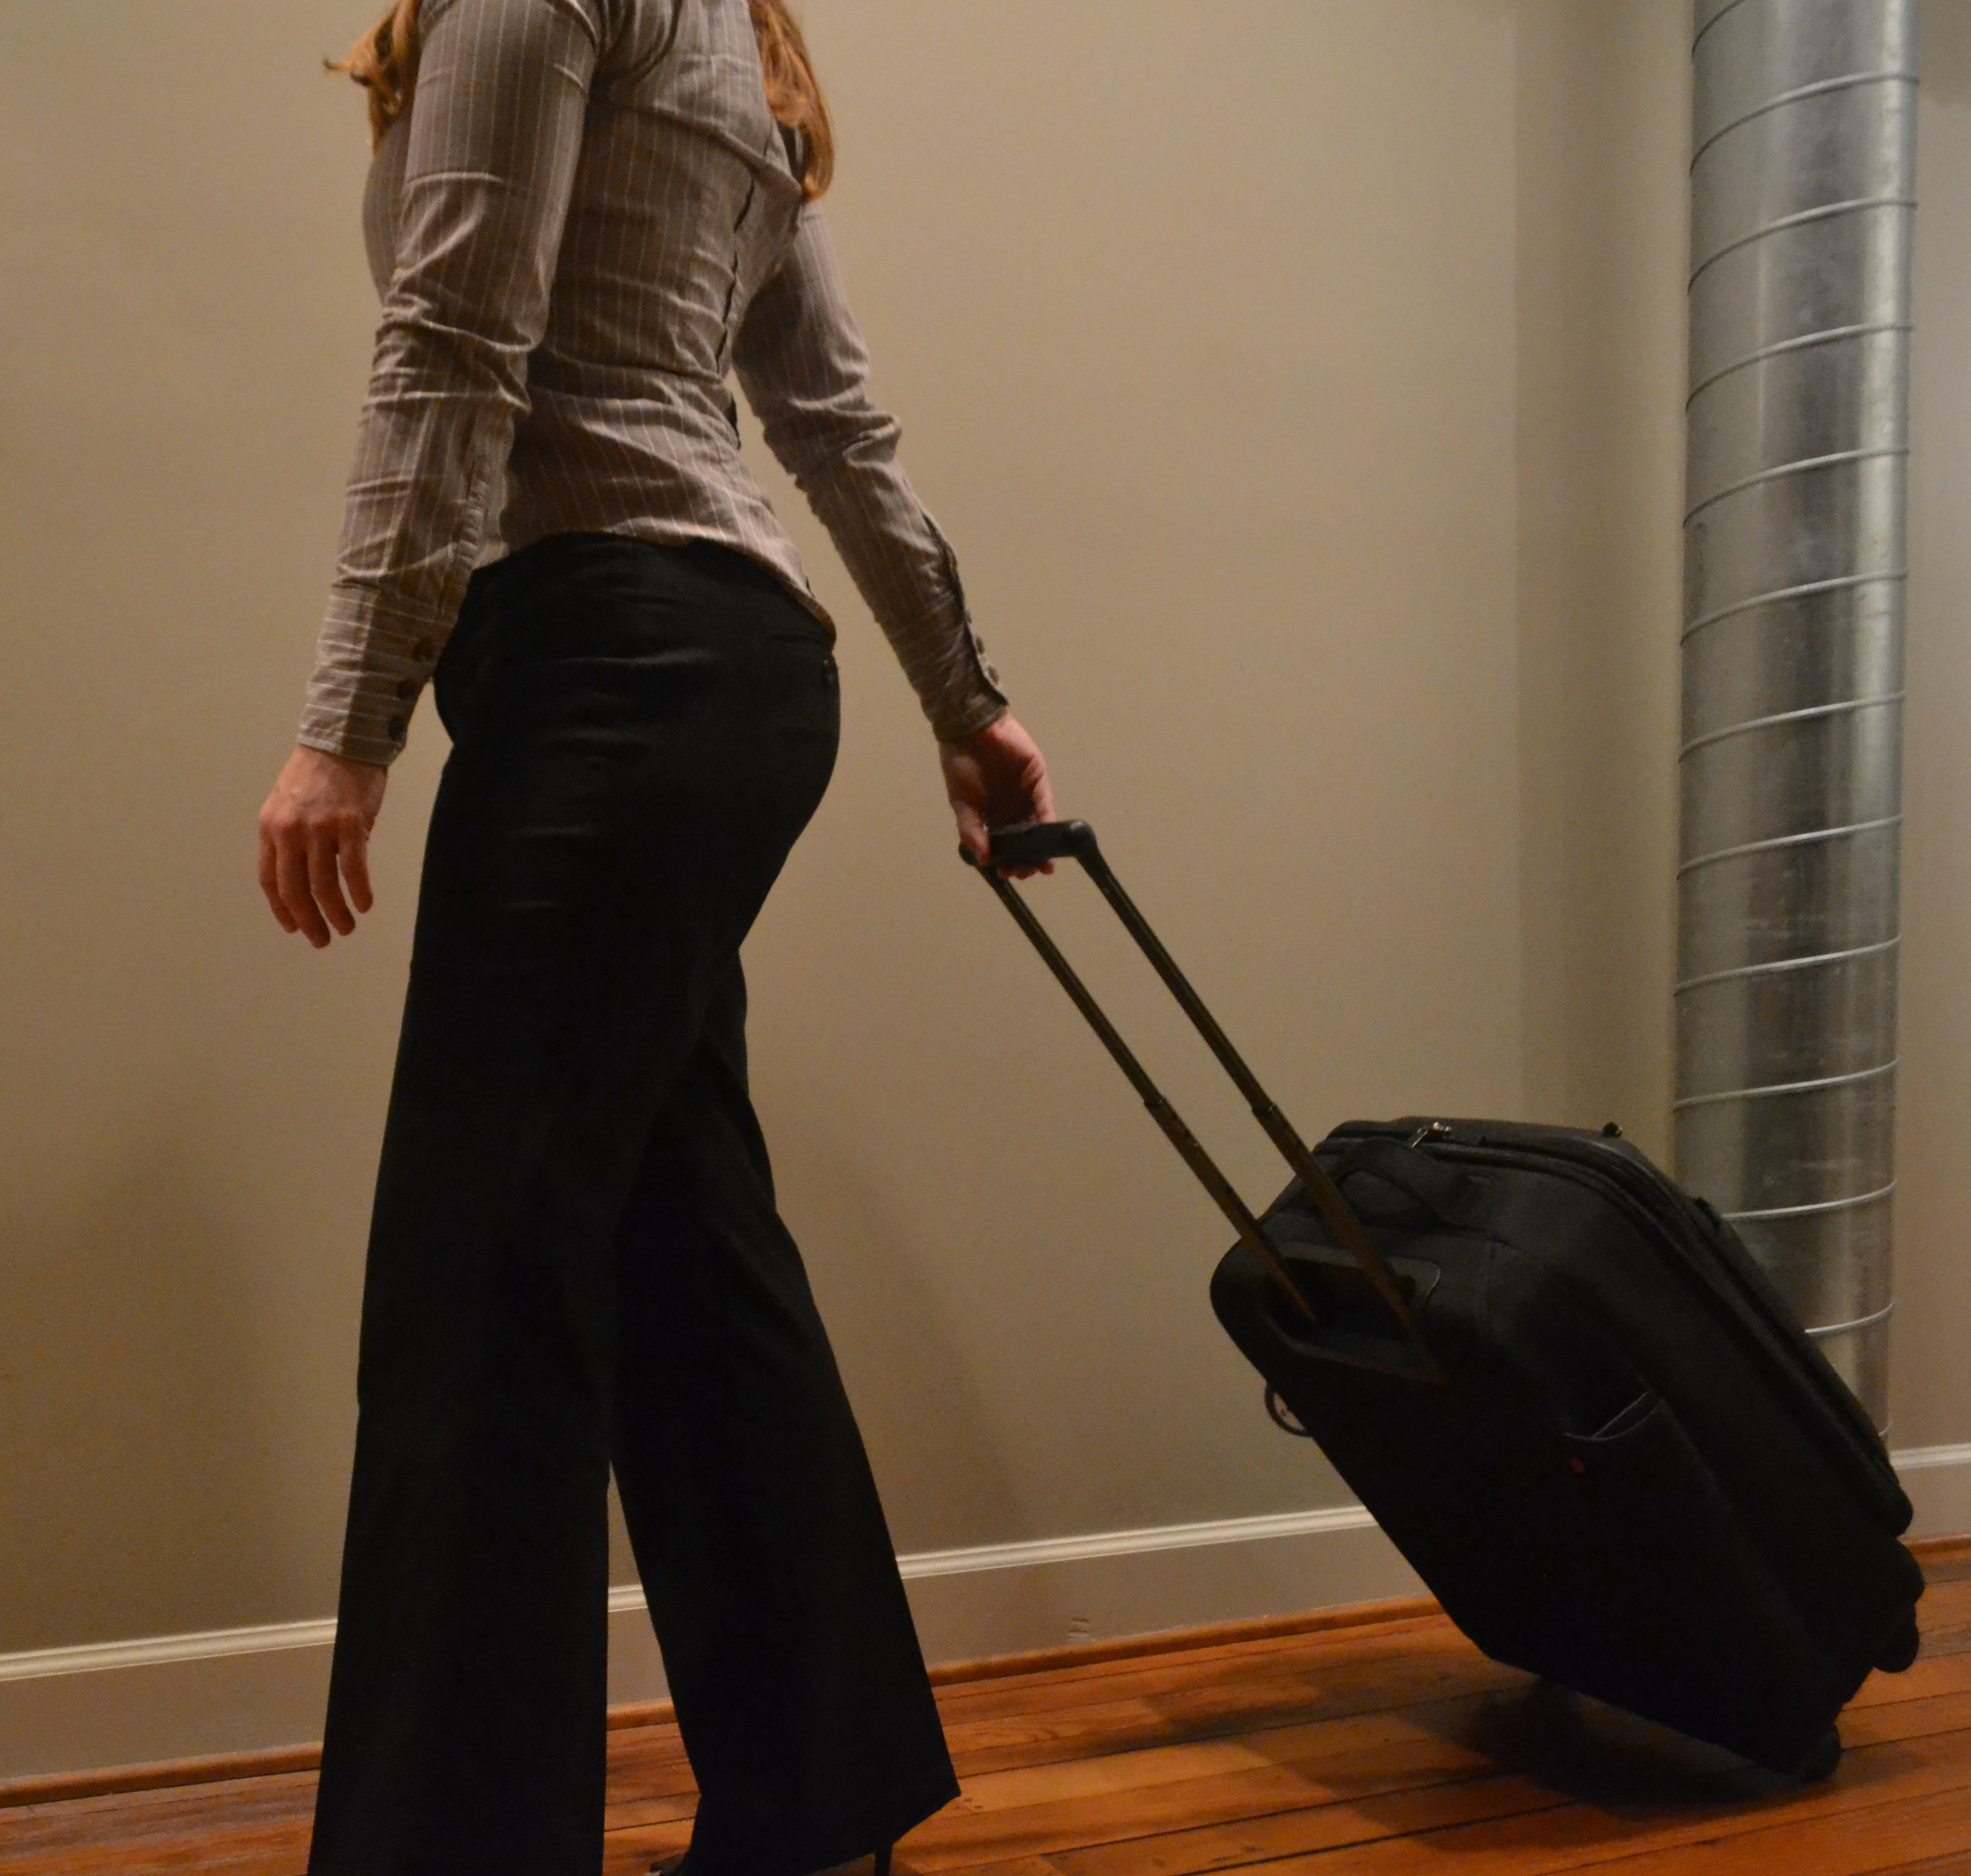 Terminal 1 Carry-On Luggage  Stylish luggage, Carry on luggage